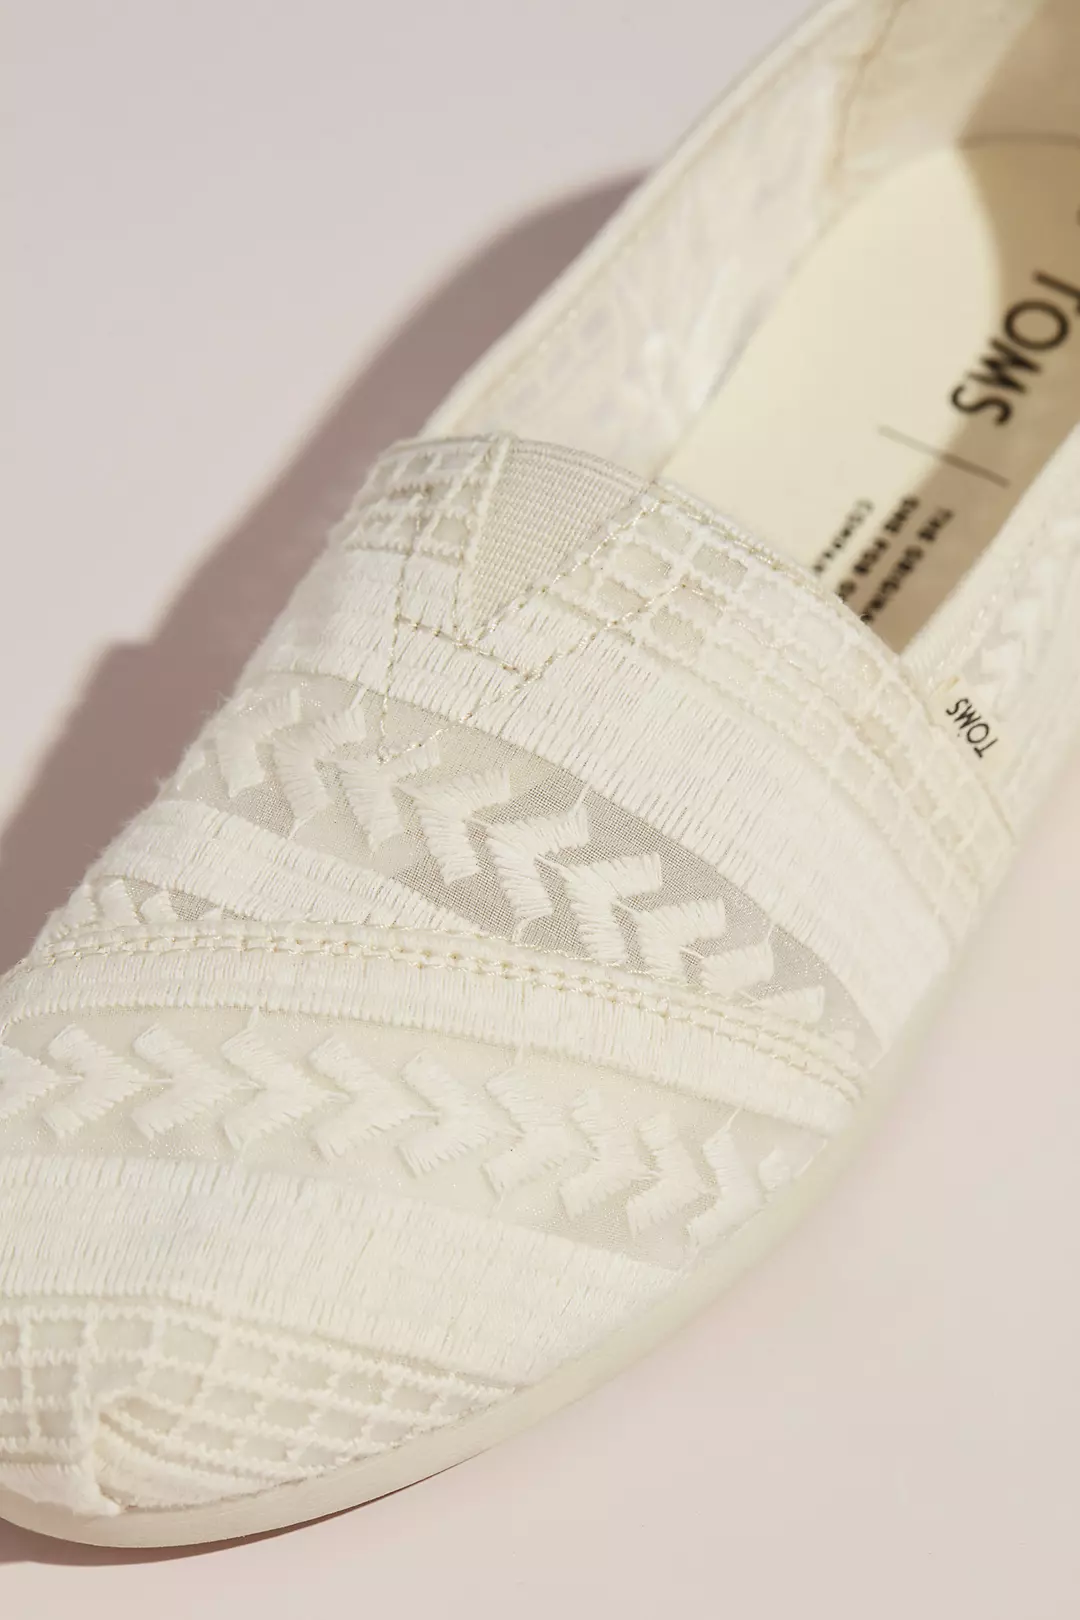 TOMS Embroidered Arrow Alpargata Slip-On Shoes Image 3